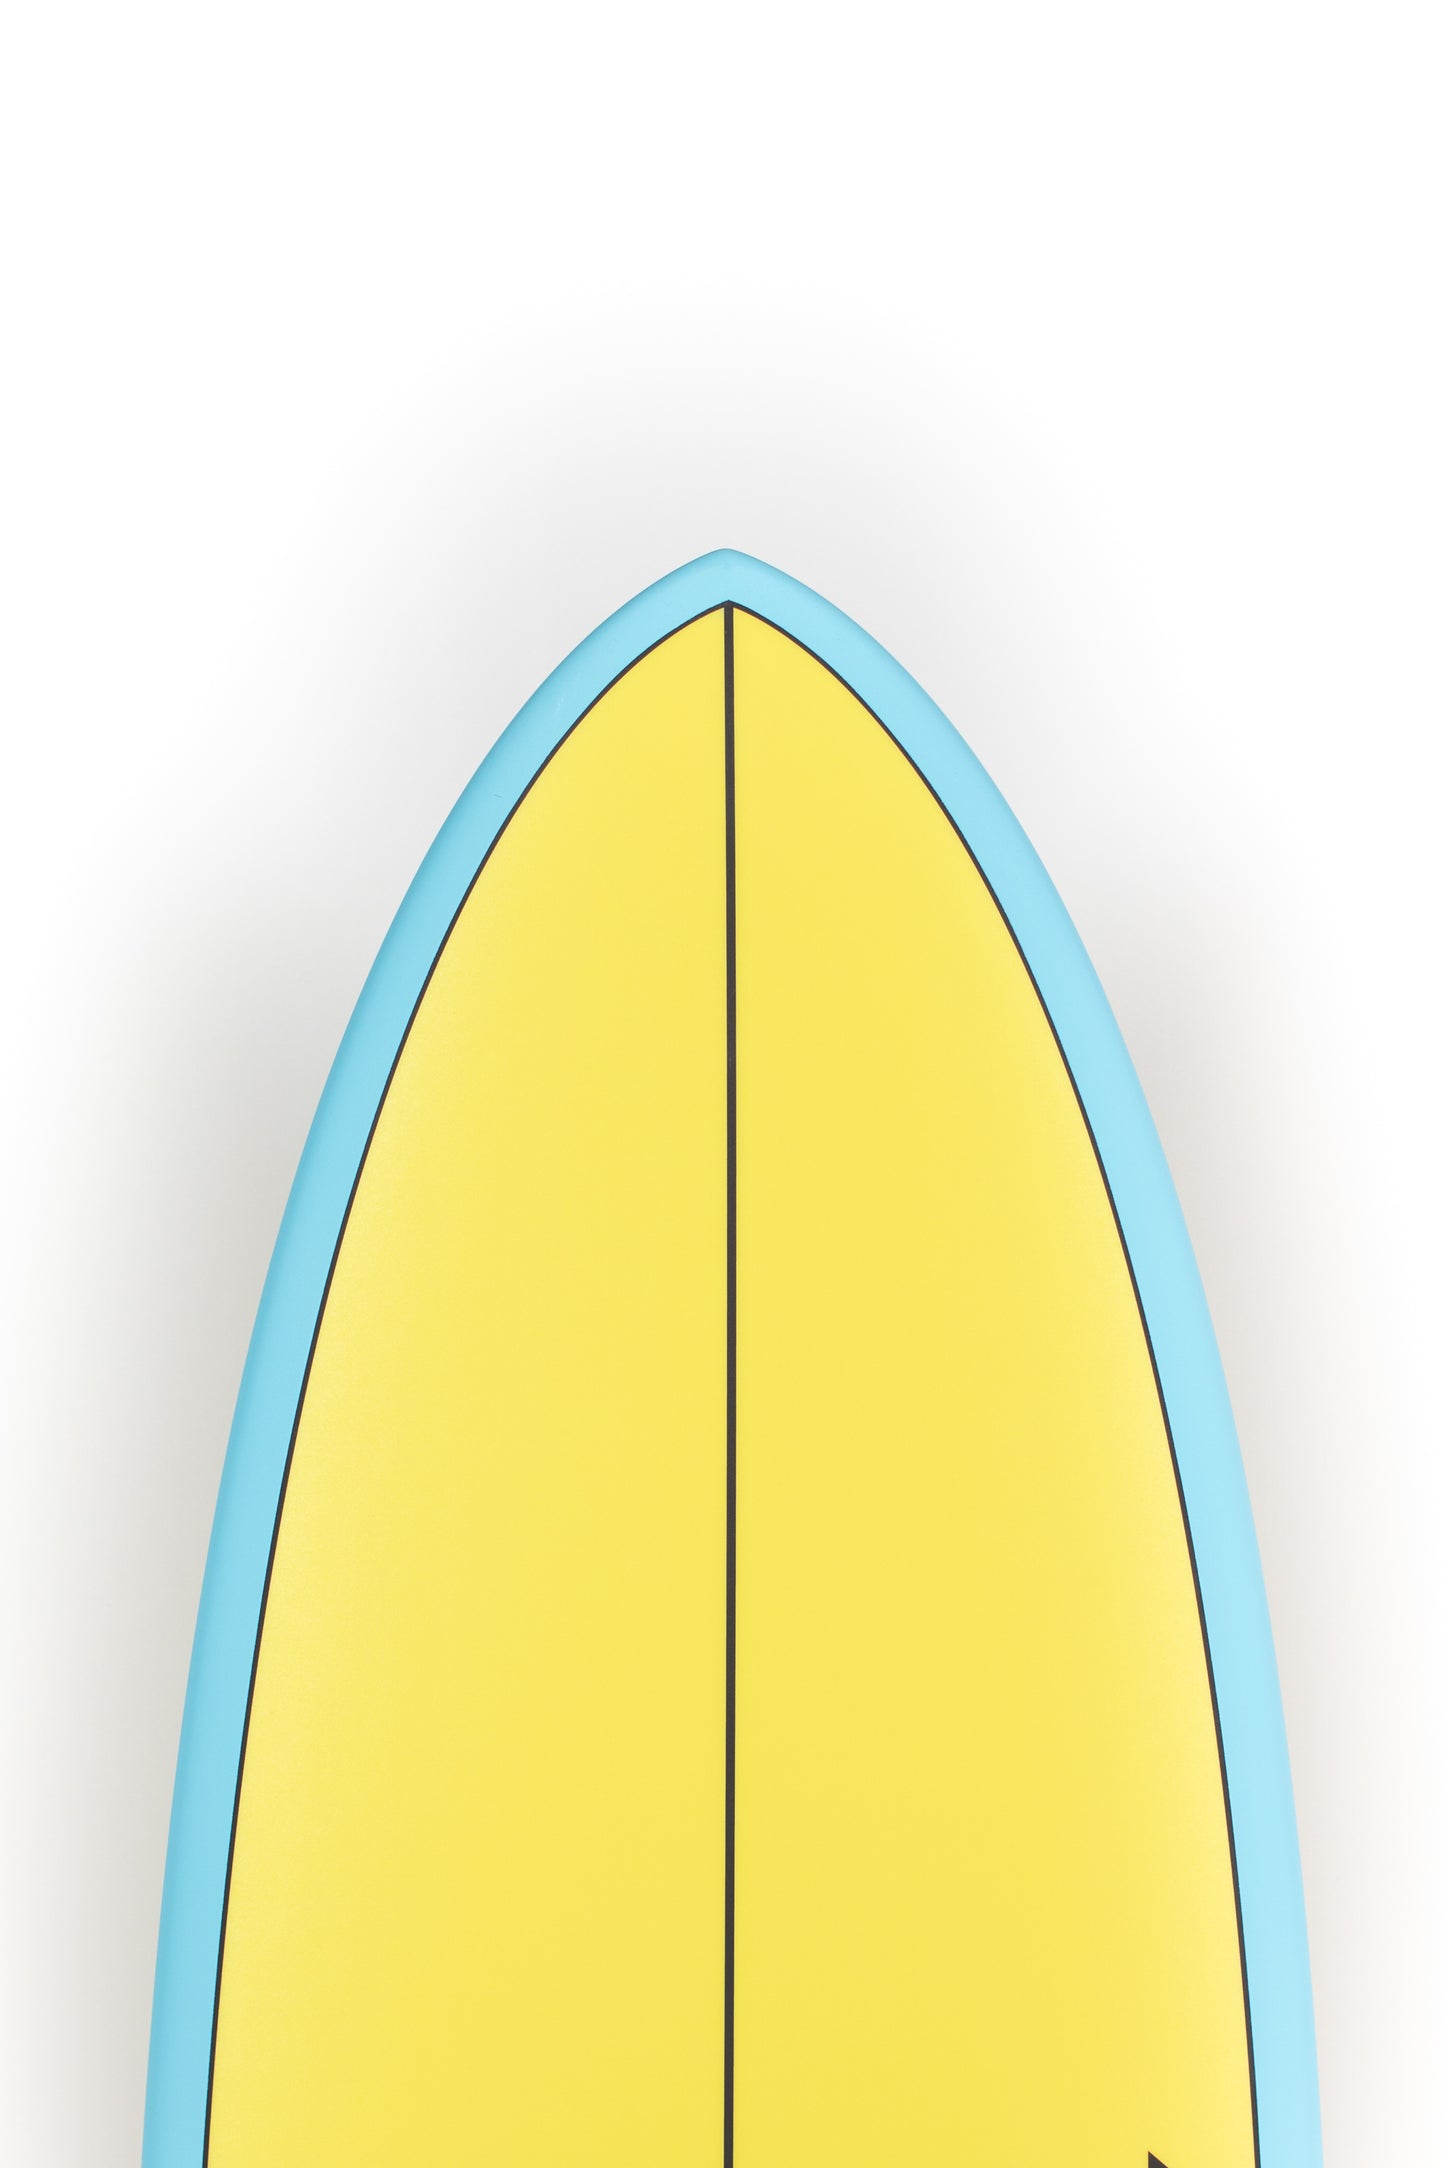 
                  
                    Pukas-Surf-Shop-Torq-Surfboards-Fish-6_3
                  
                